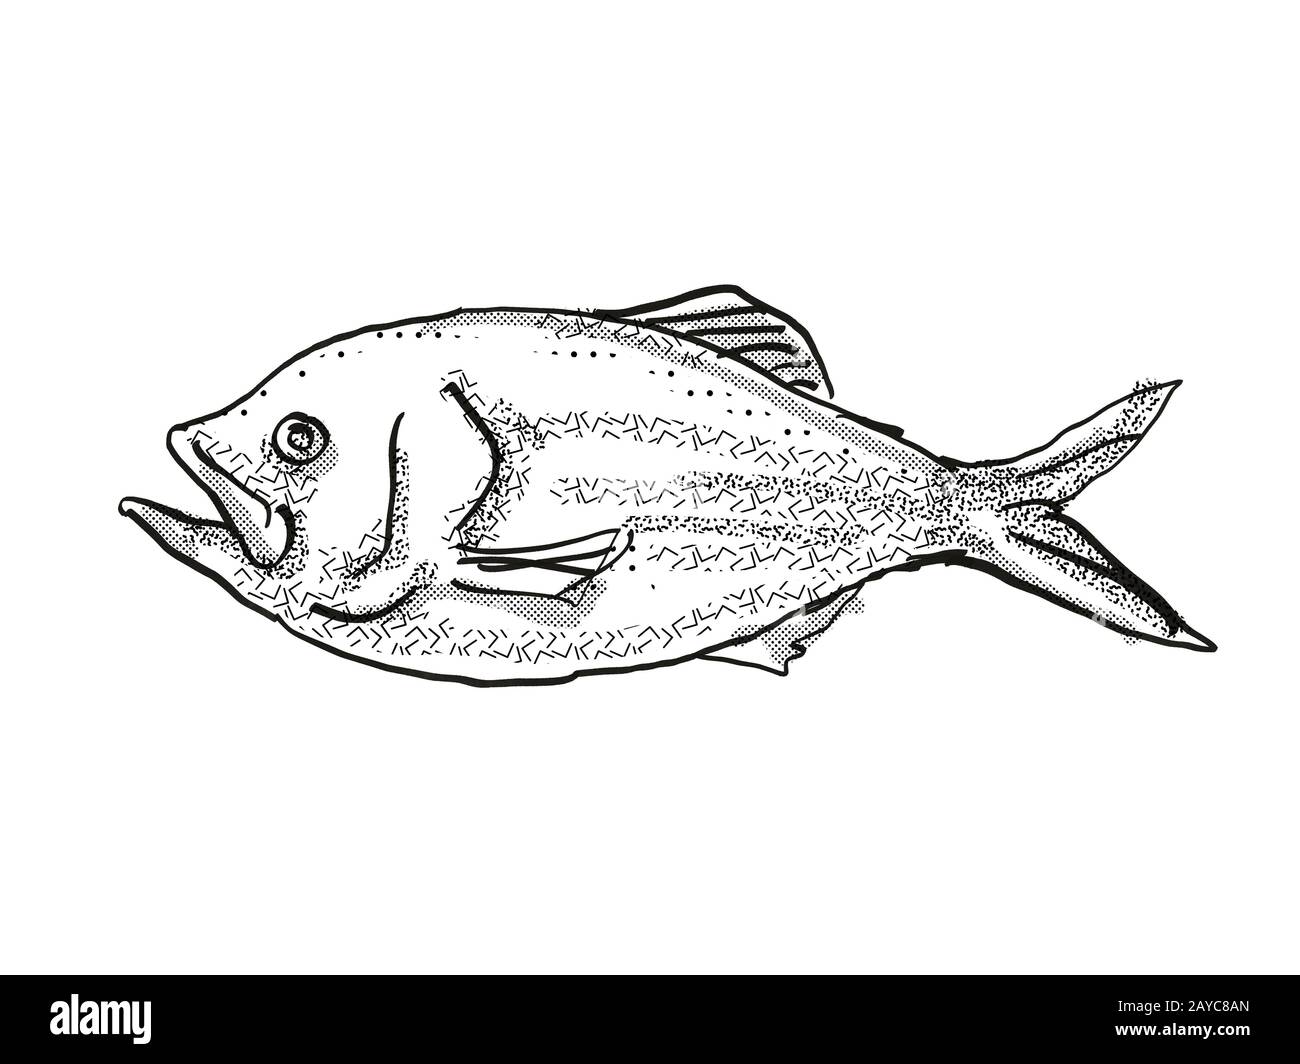 226+ Thousand Cartoon Fish Drawing Royalty-Free Images, Stock